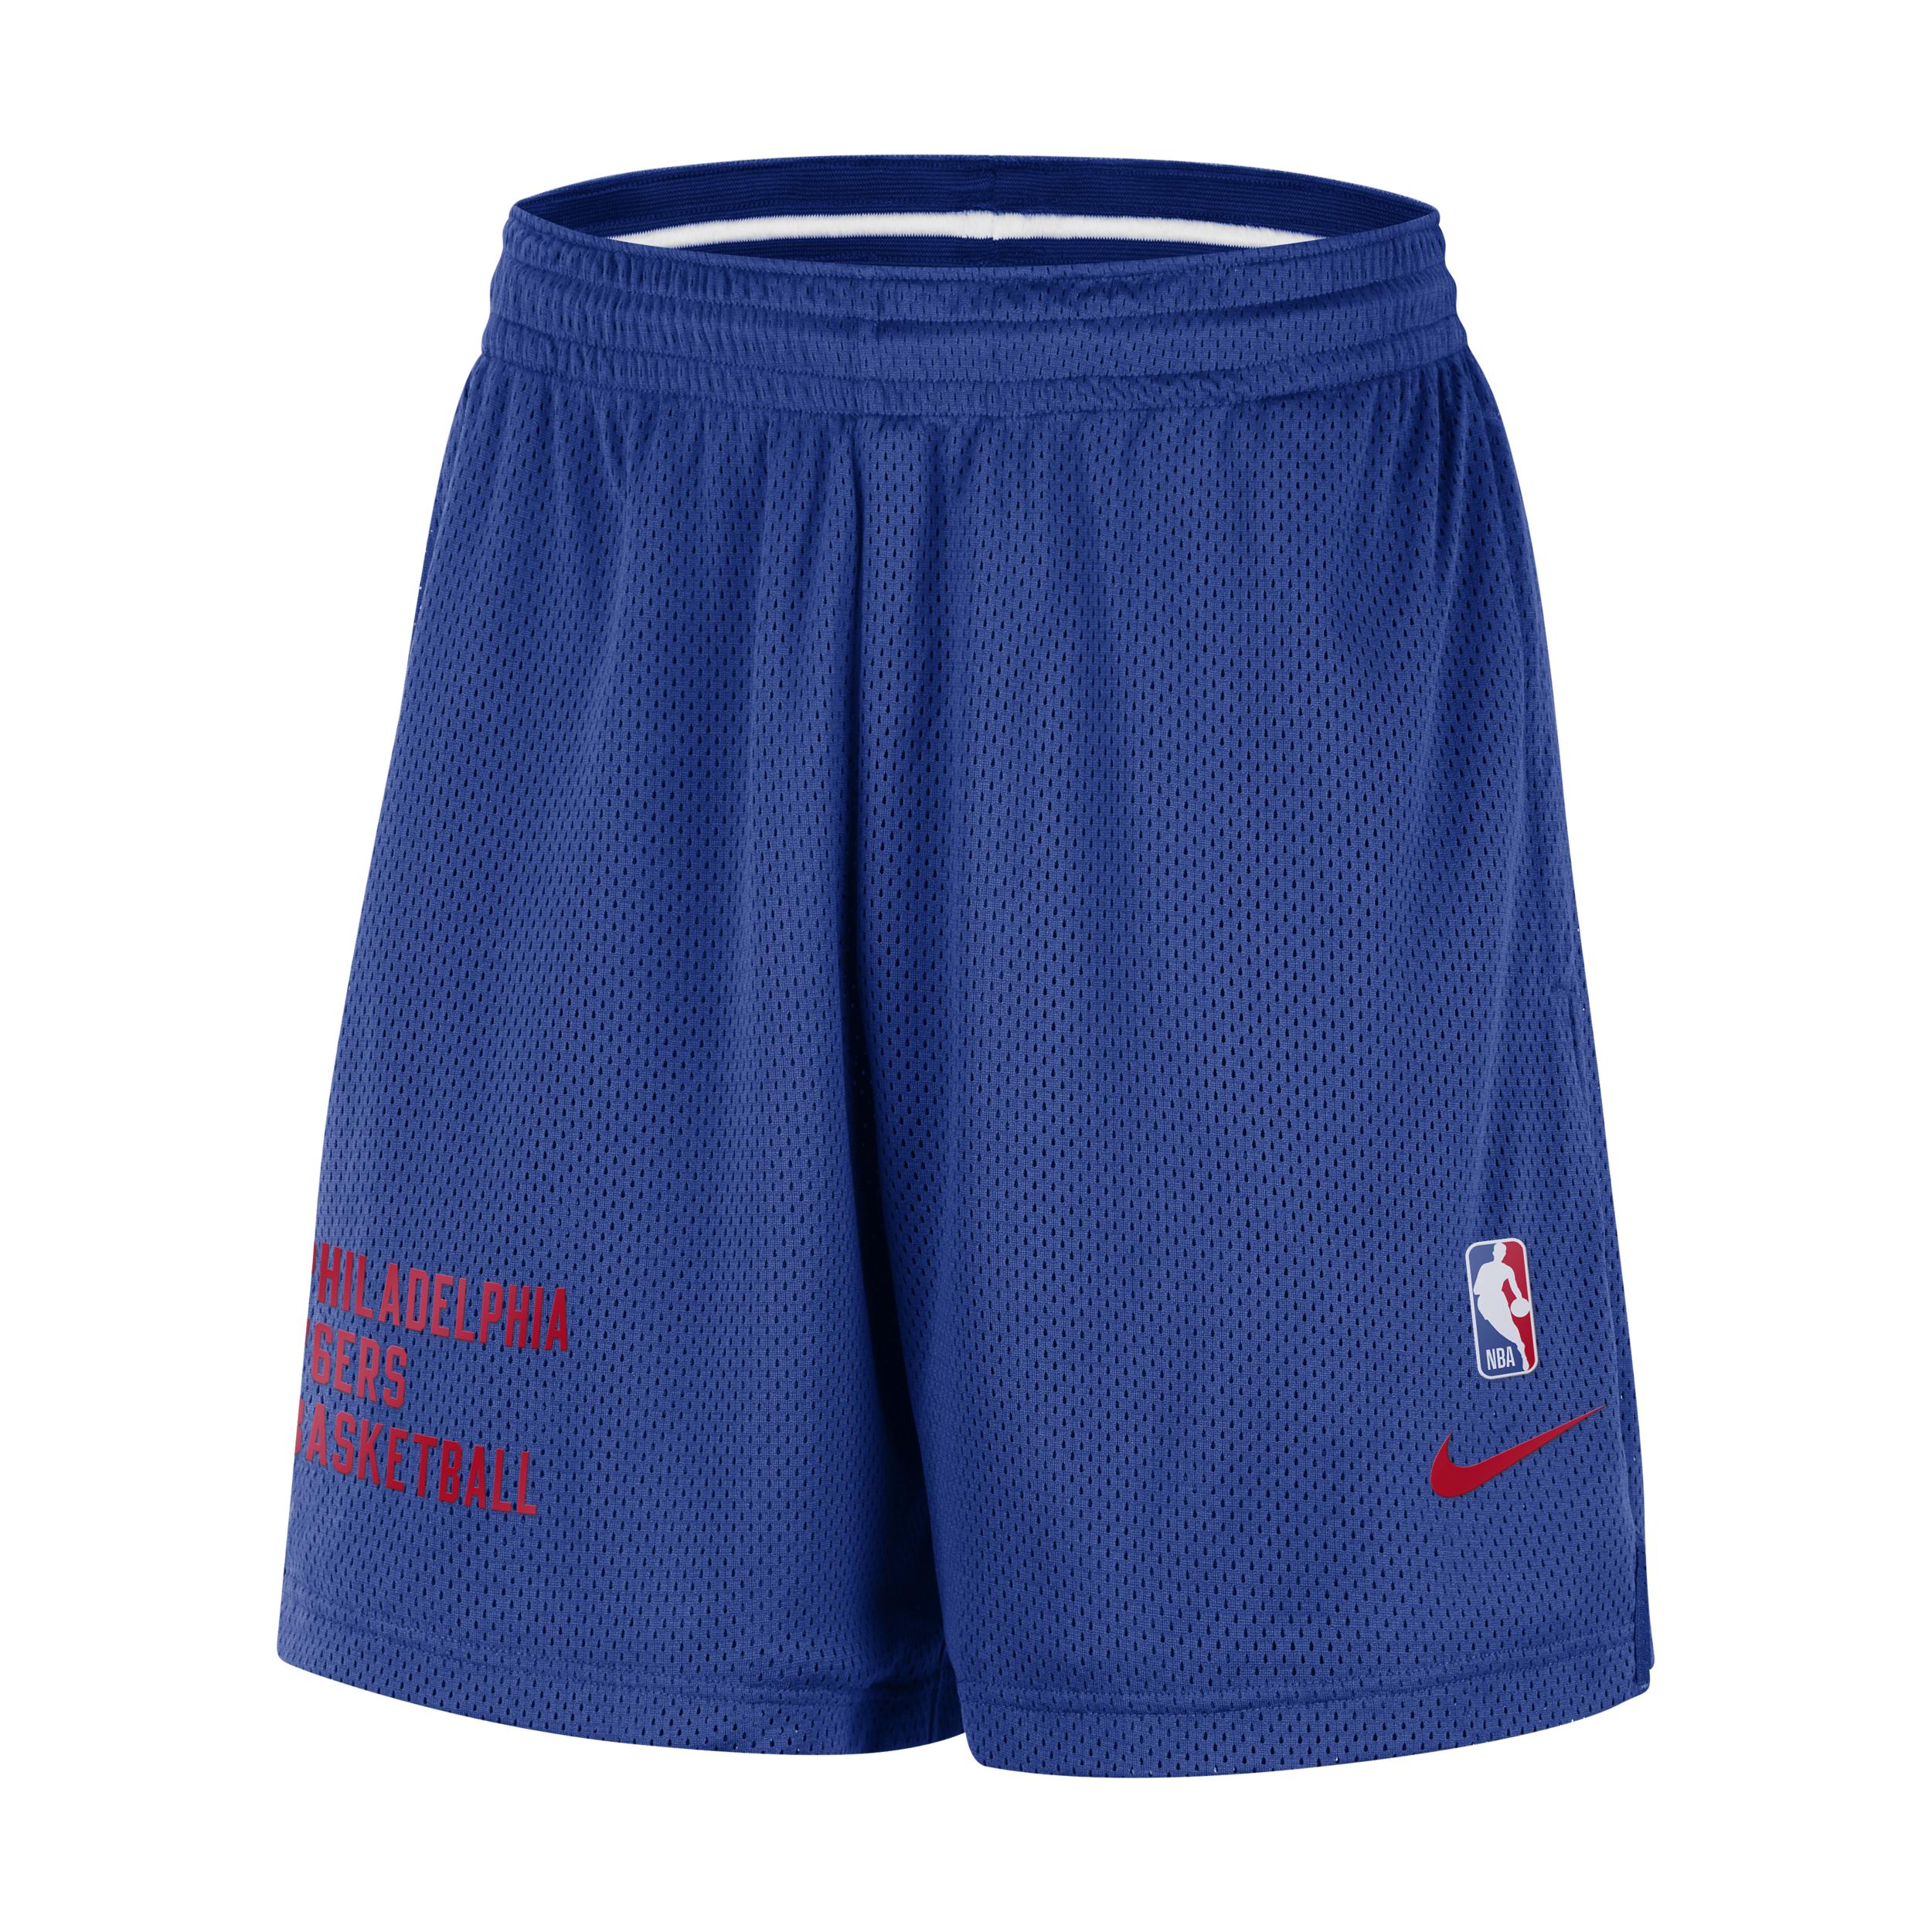 Nike, Tops, Nike Nba Blue Philadelphia 76ers Long Sleeve Pullover  Sweatshirt Hoodie Size M